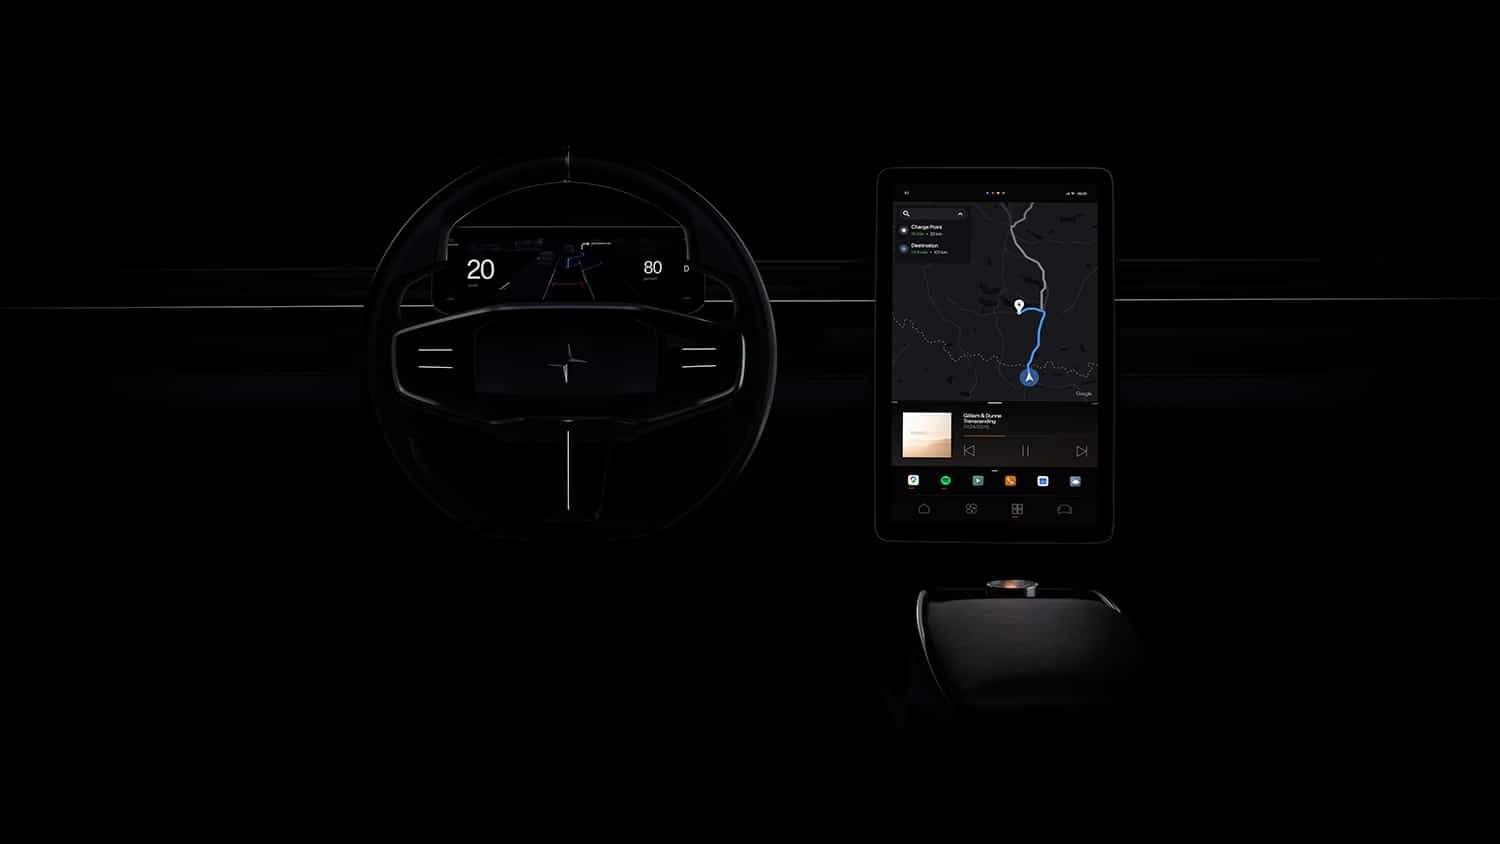 Polestar 2 will feature customizable, smartphone-like infotainment system.